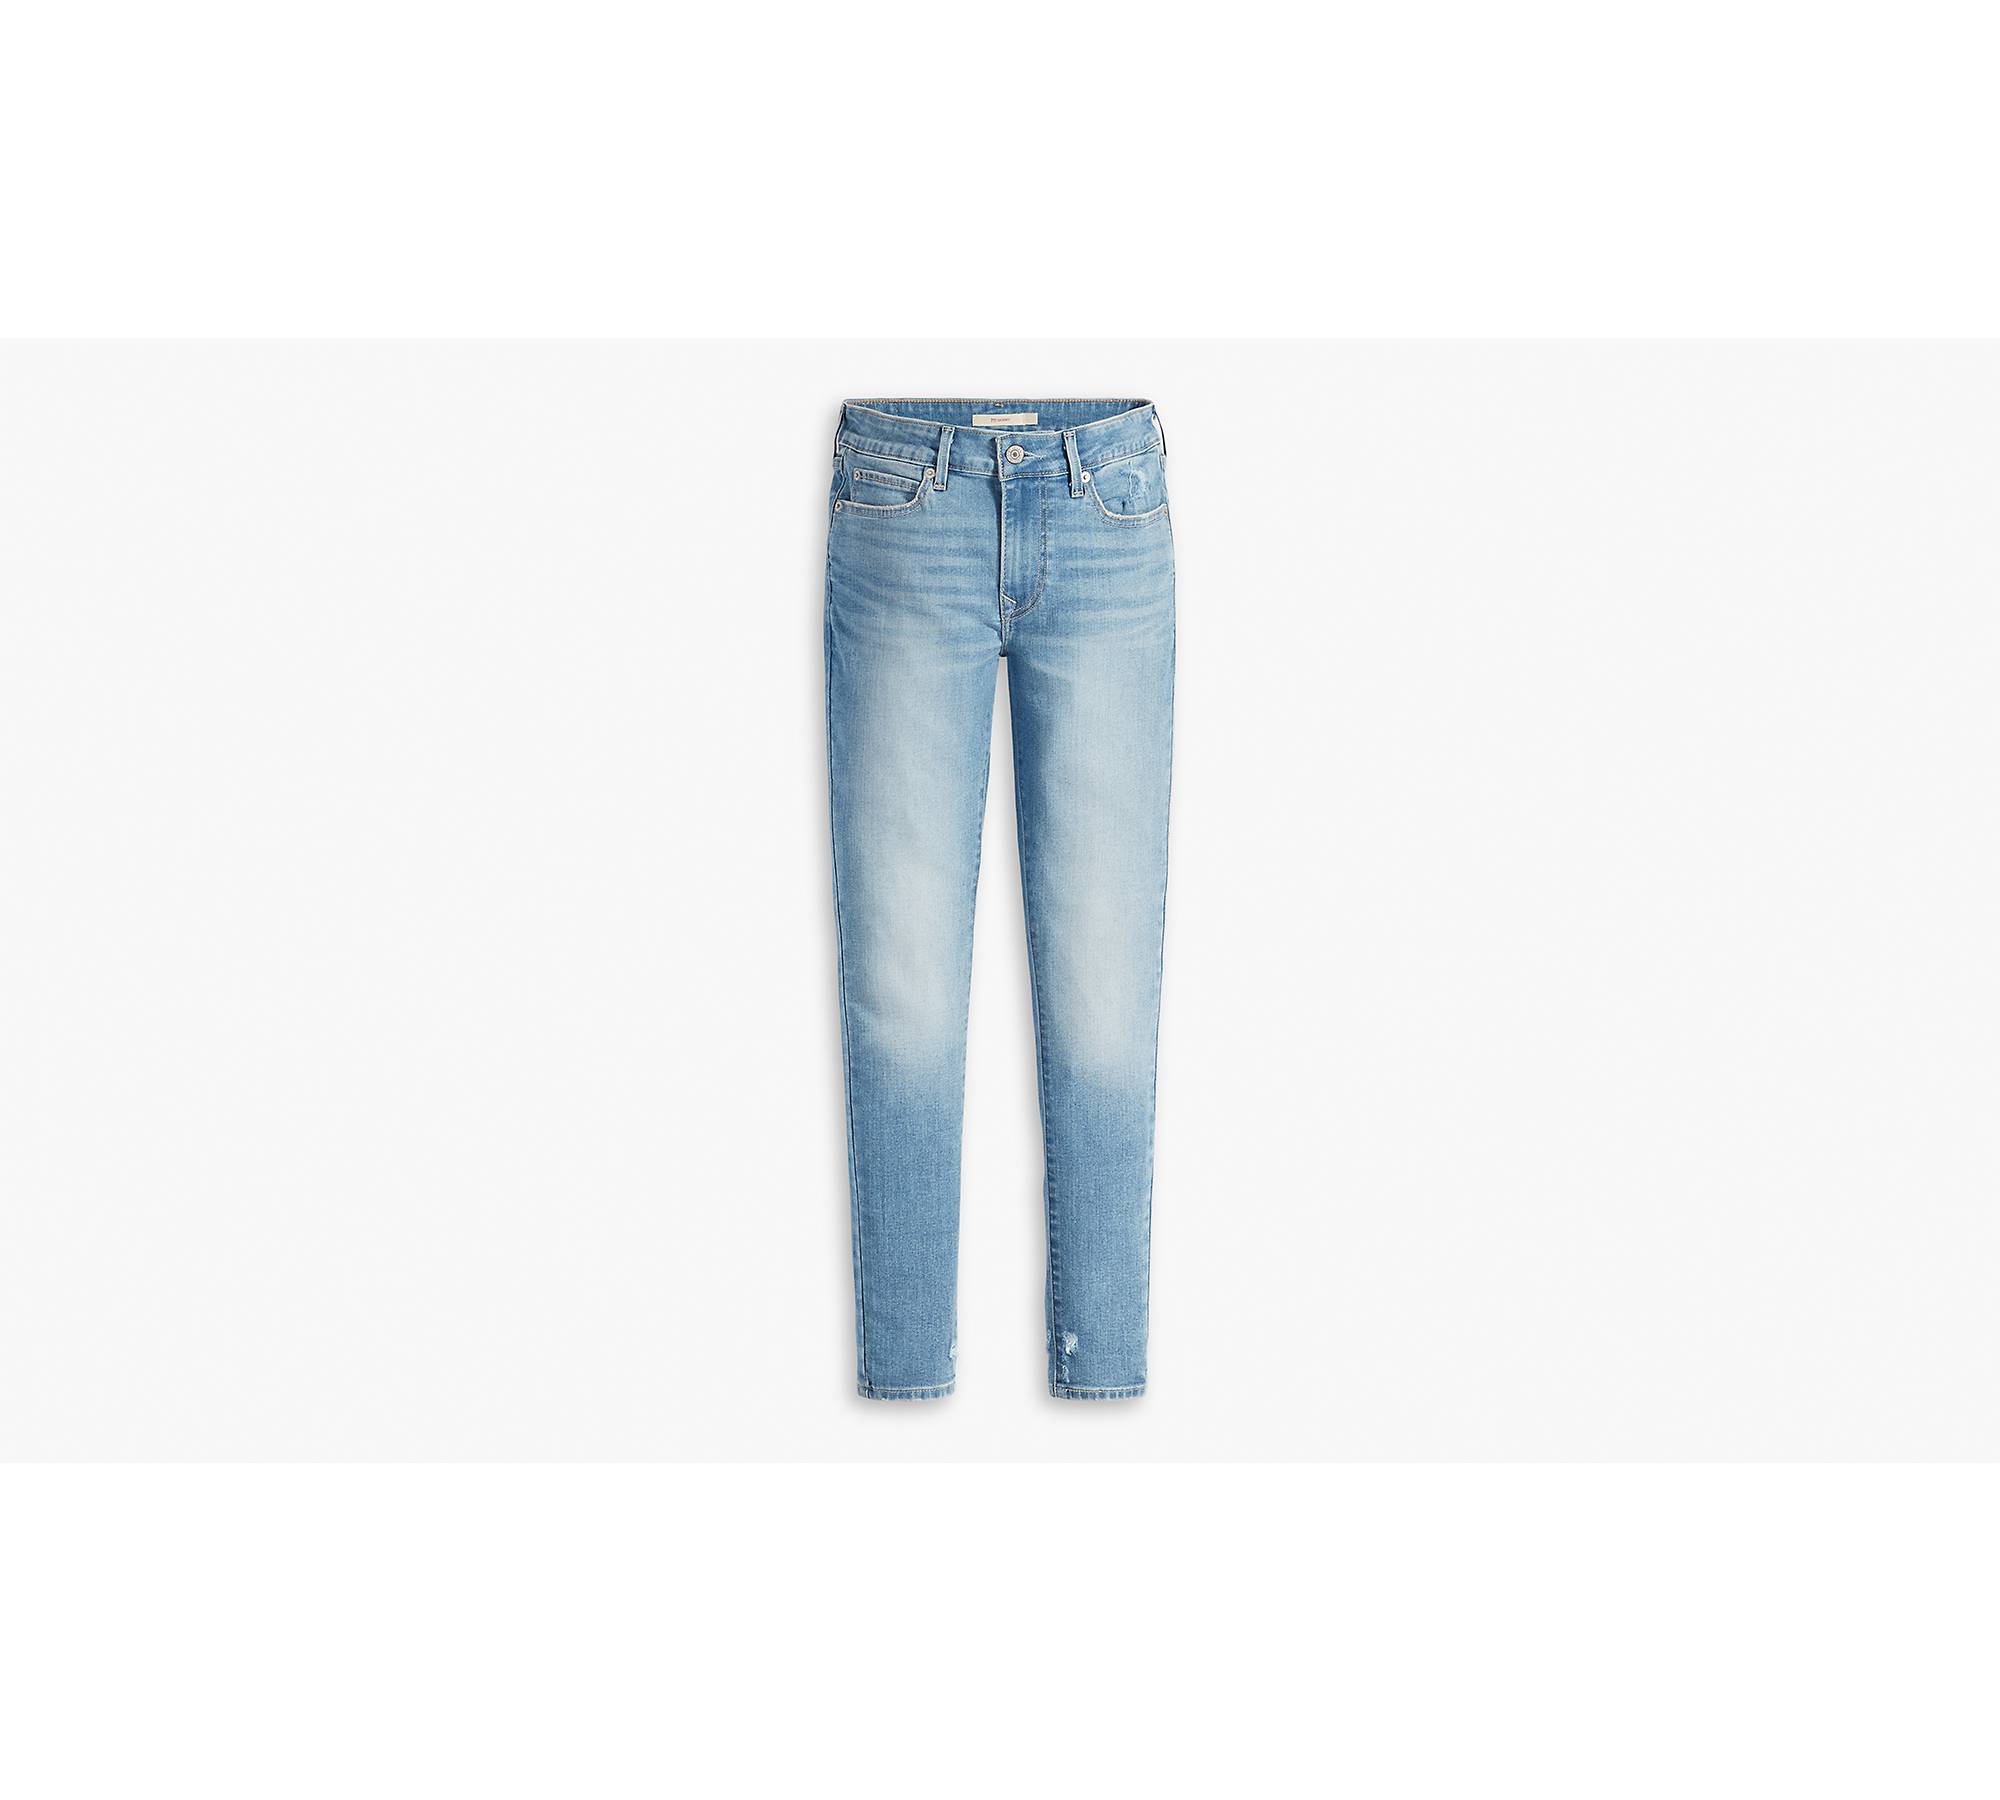 Levi's Strauss & Co Mujer 711 Jeans Ajustados Talla W27 L30 - Gg